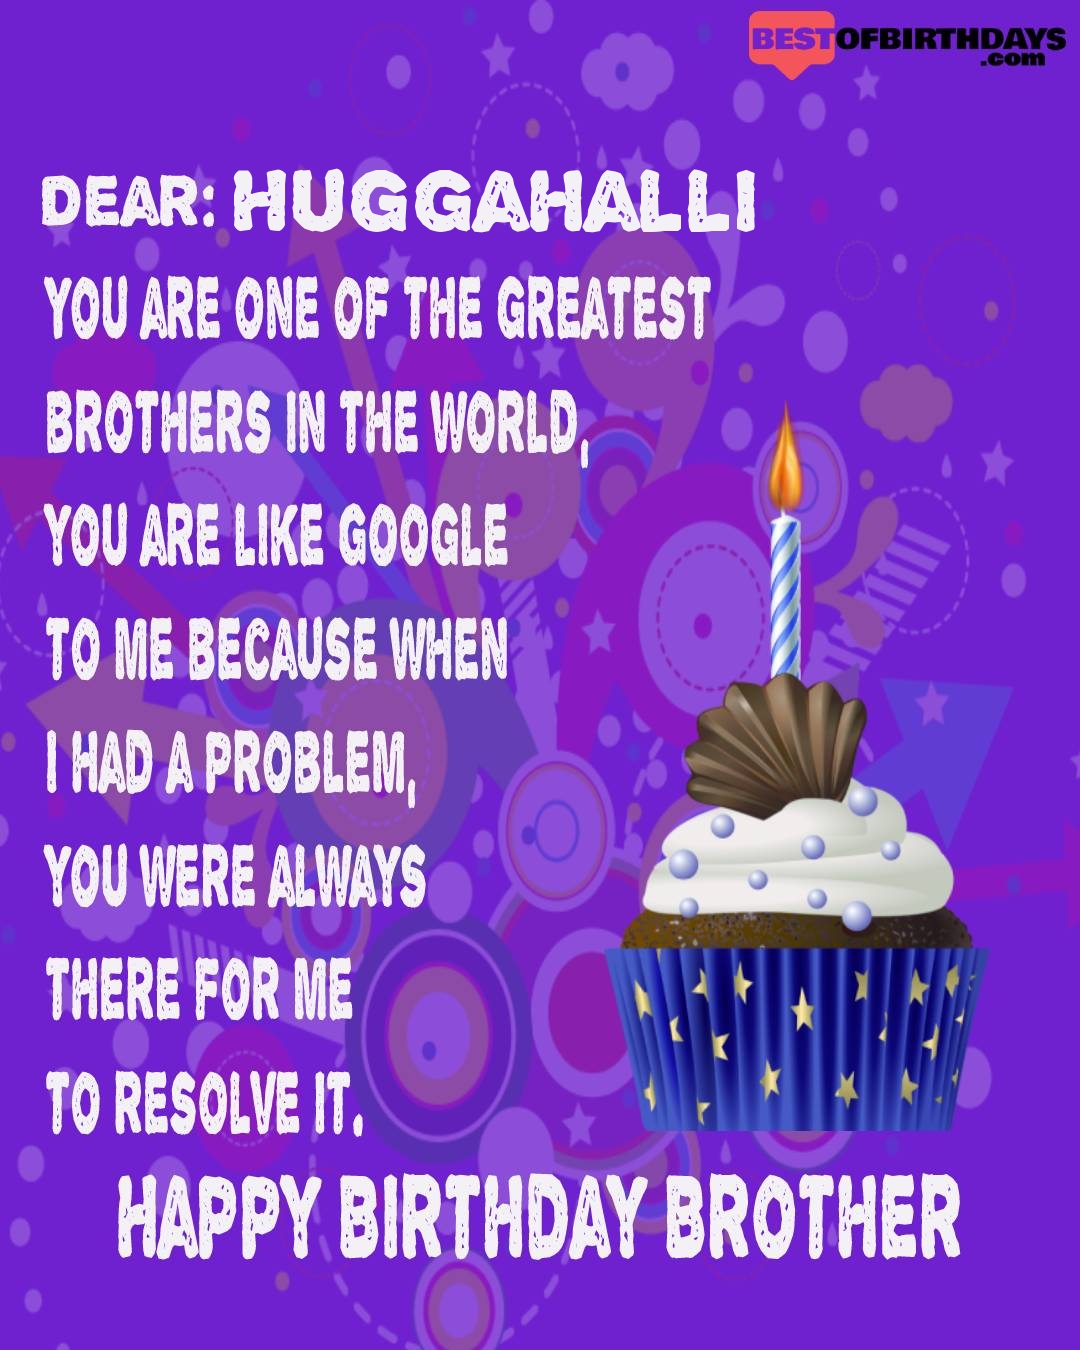 Happy birthday huggahalli bhai brother bro